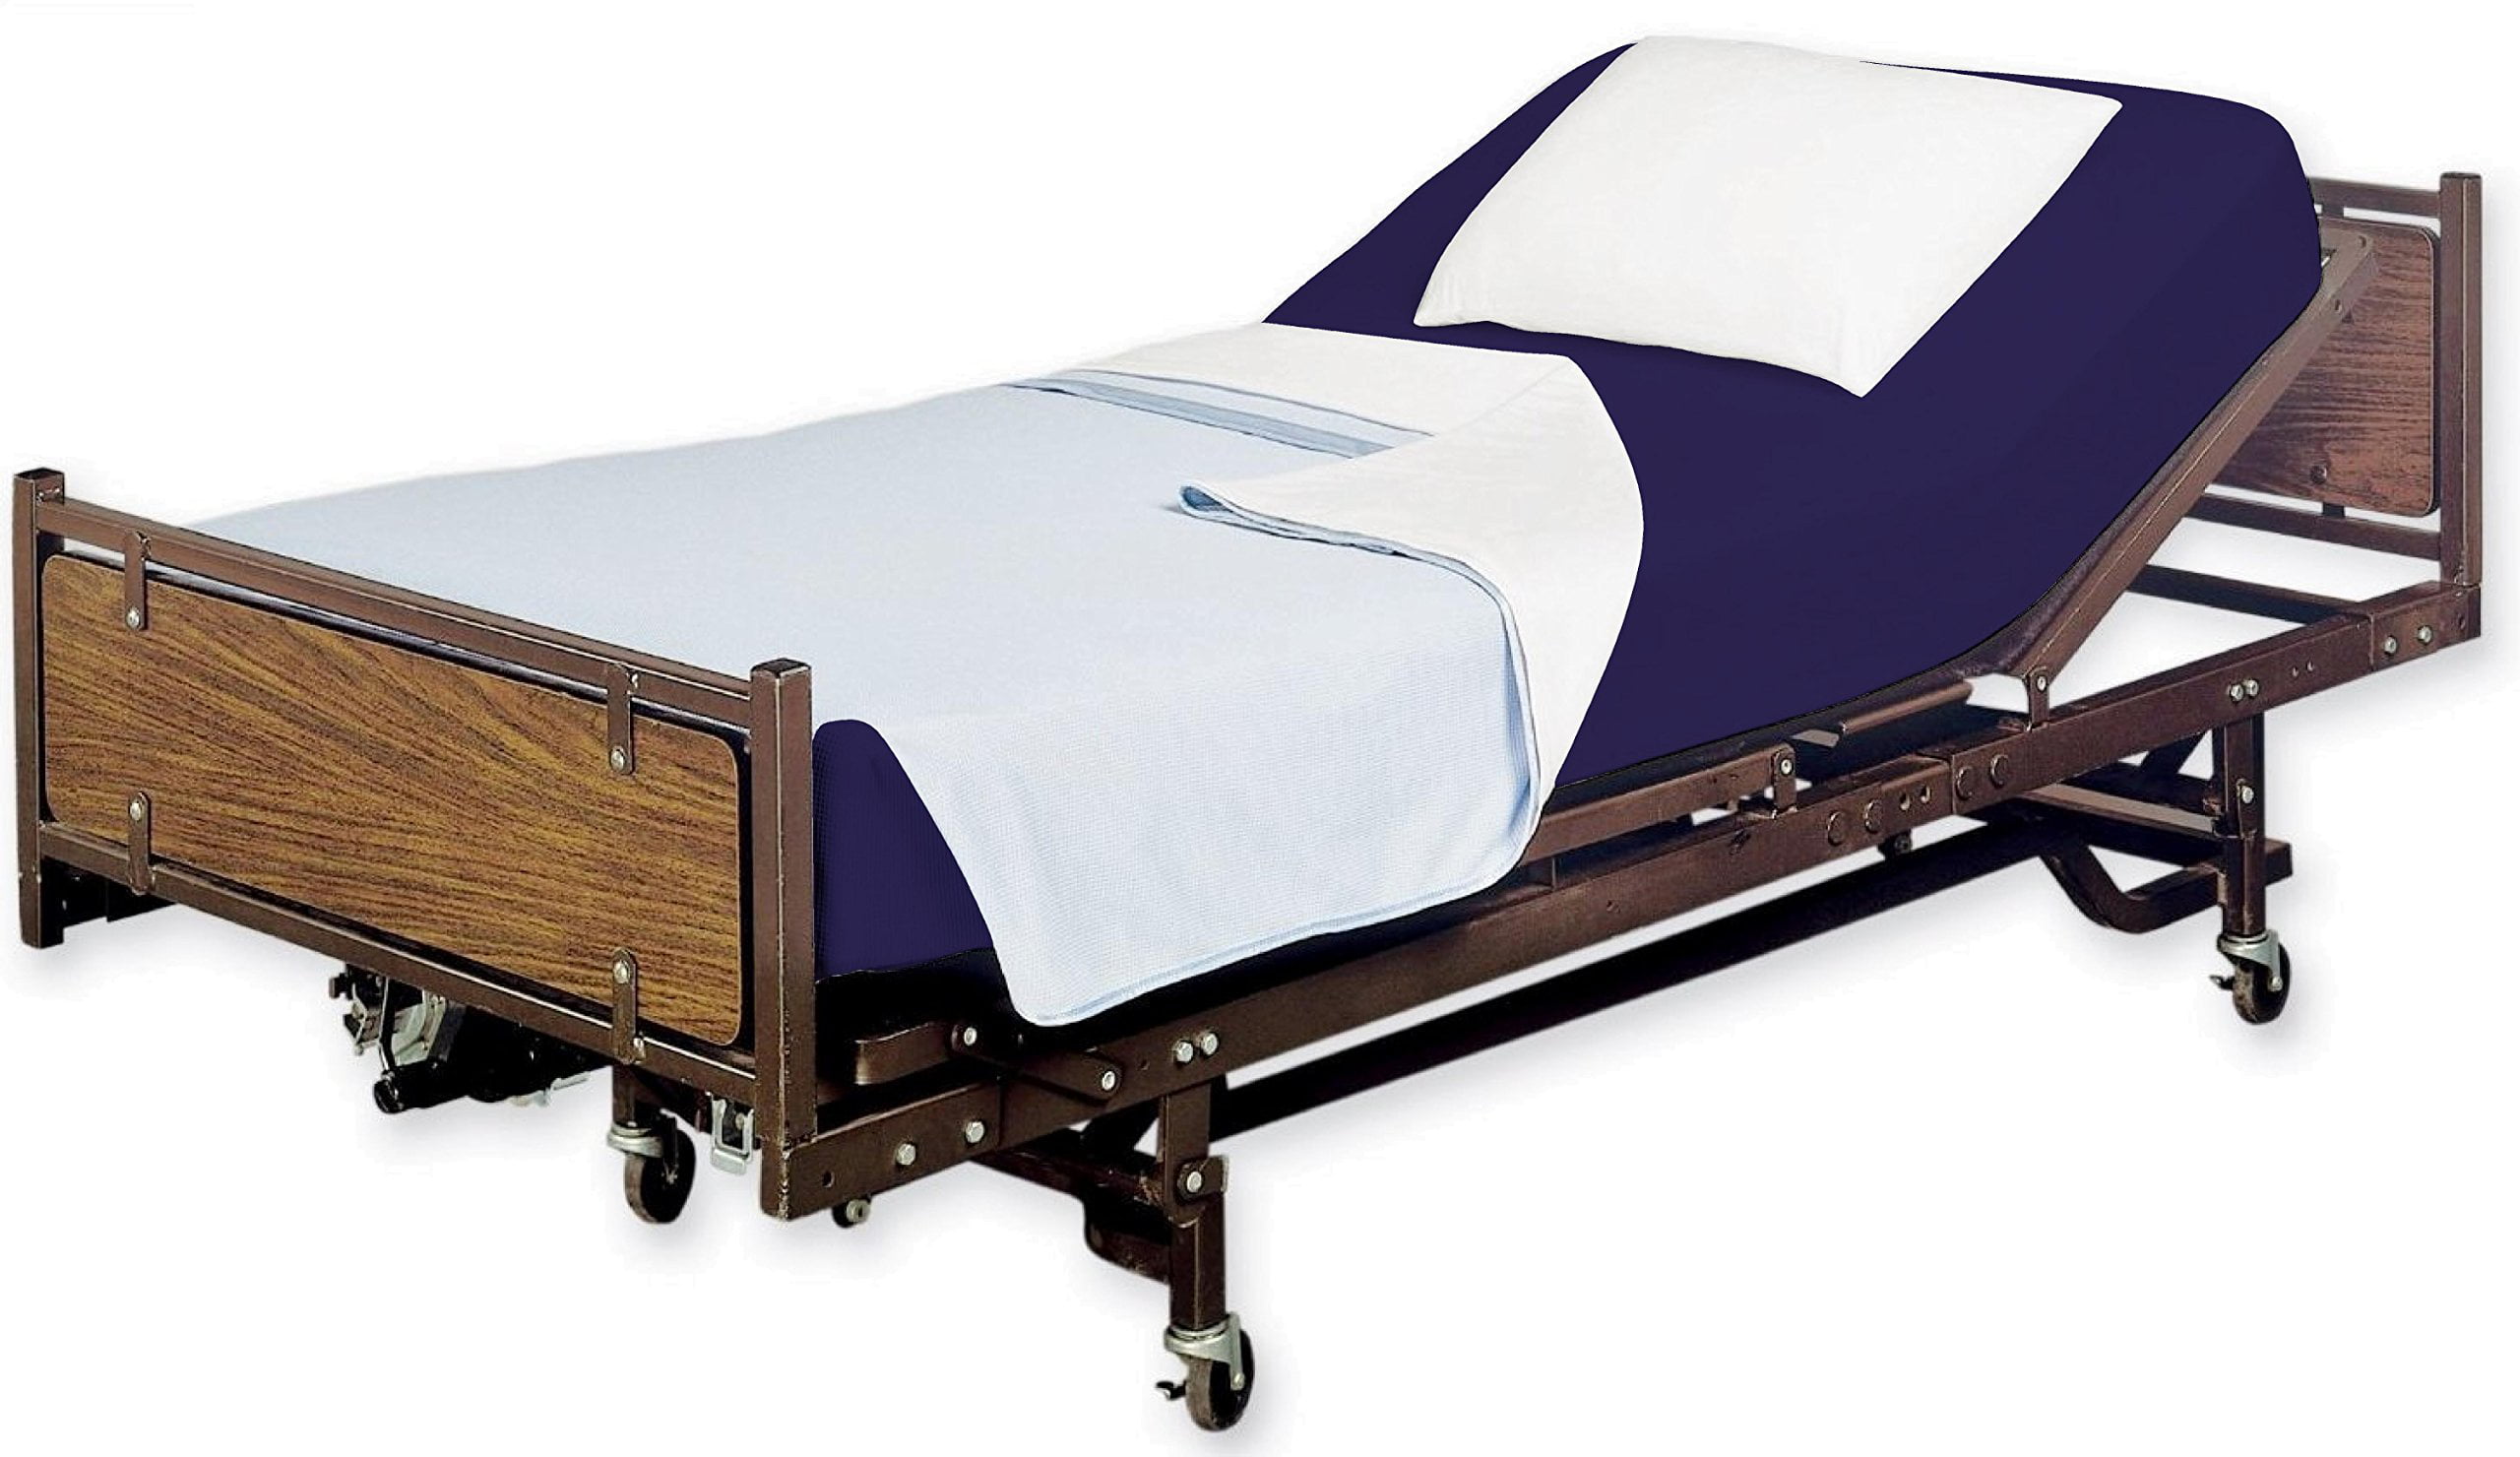 Lenenz Hospital Bed Sheet - Soft Jersey Twin Fitted Sheets 2 Pack - Knitted Fitted Hospital Bed Sheets - 36